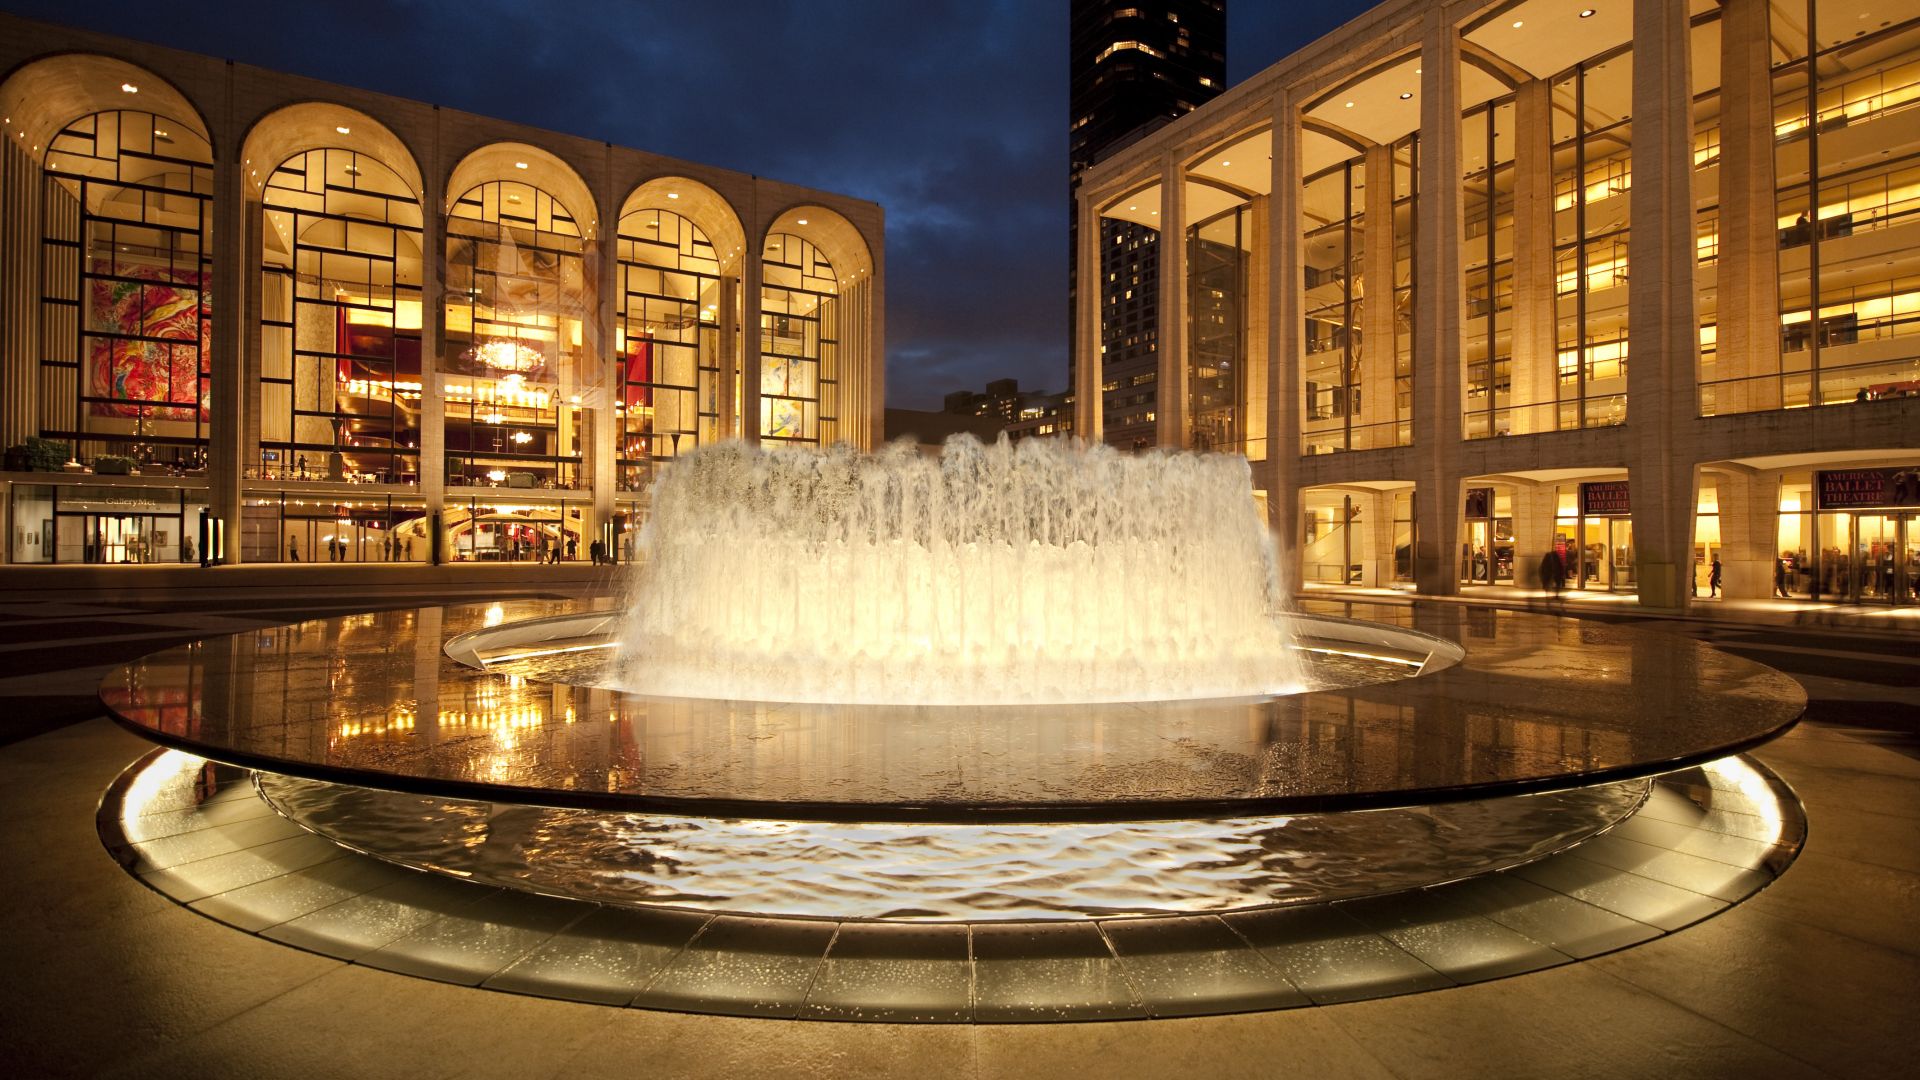 Линкольн-центр, Нью-Йорк, США, туризм, путешествие, фонтан, Lincoln Center for the Performing Arts, New York, NY, USA, tourism, travel, fountain (horizontal)